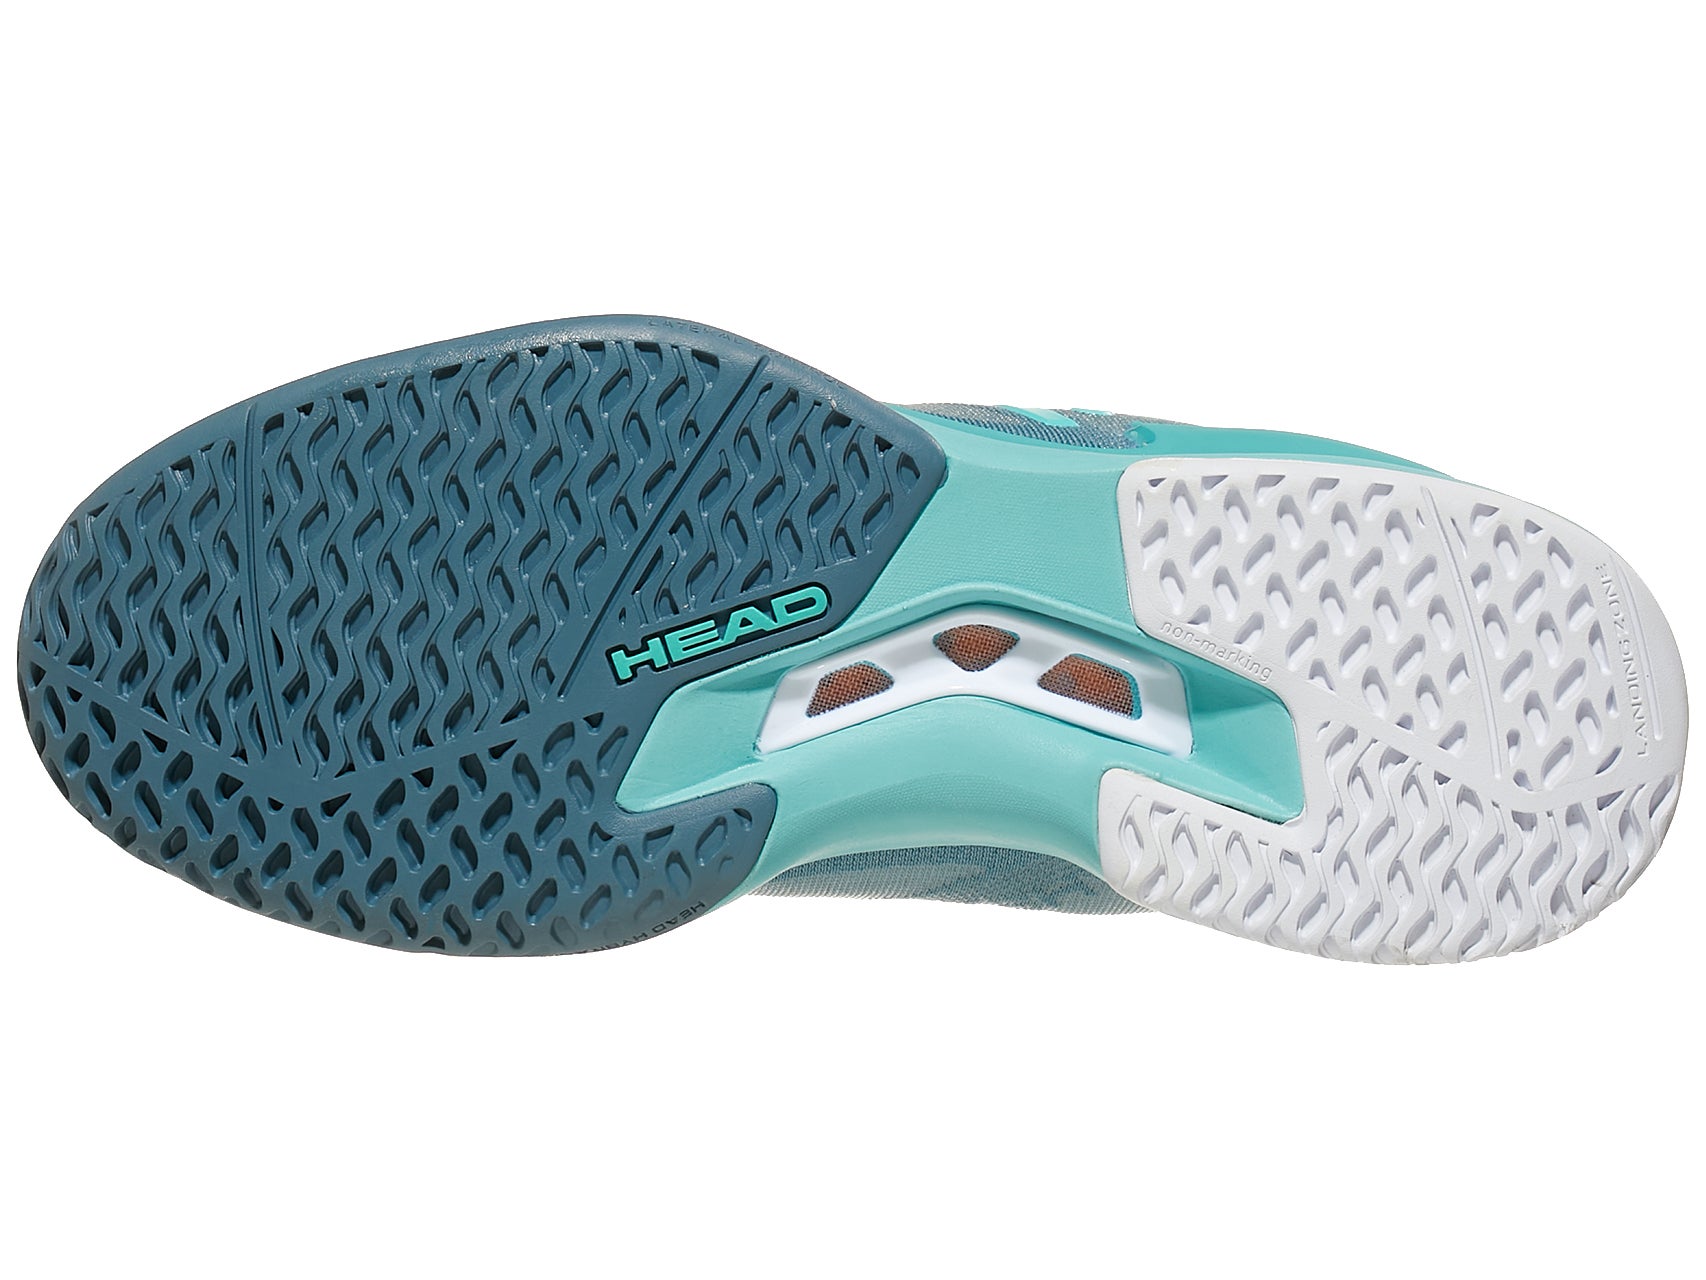 HEAD Sprint Pro Women's Tennis Shoes Sports Athletic Blue/Pink 274005 